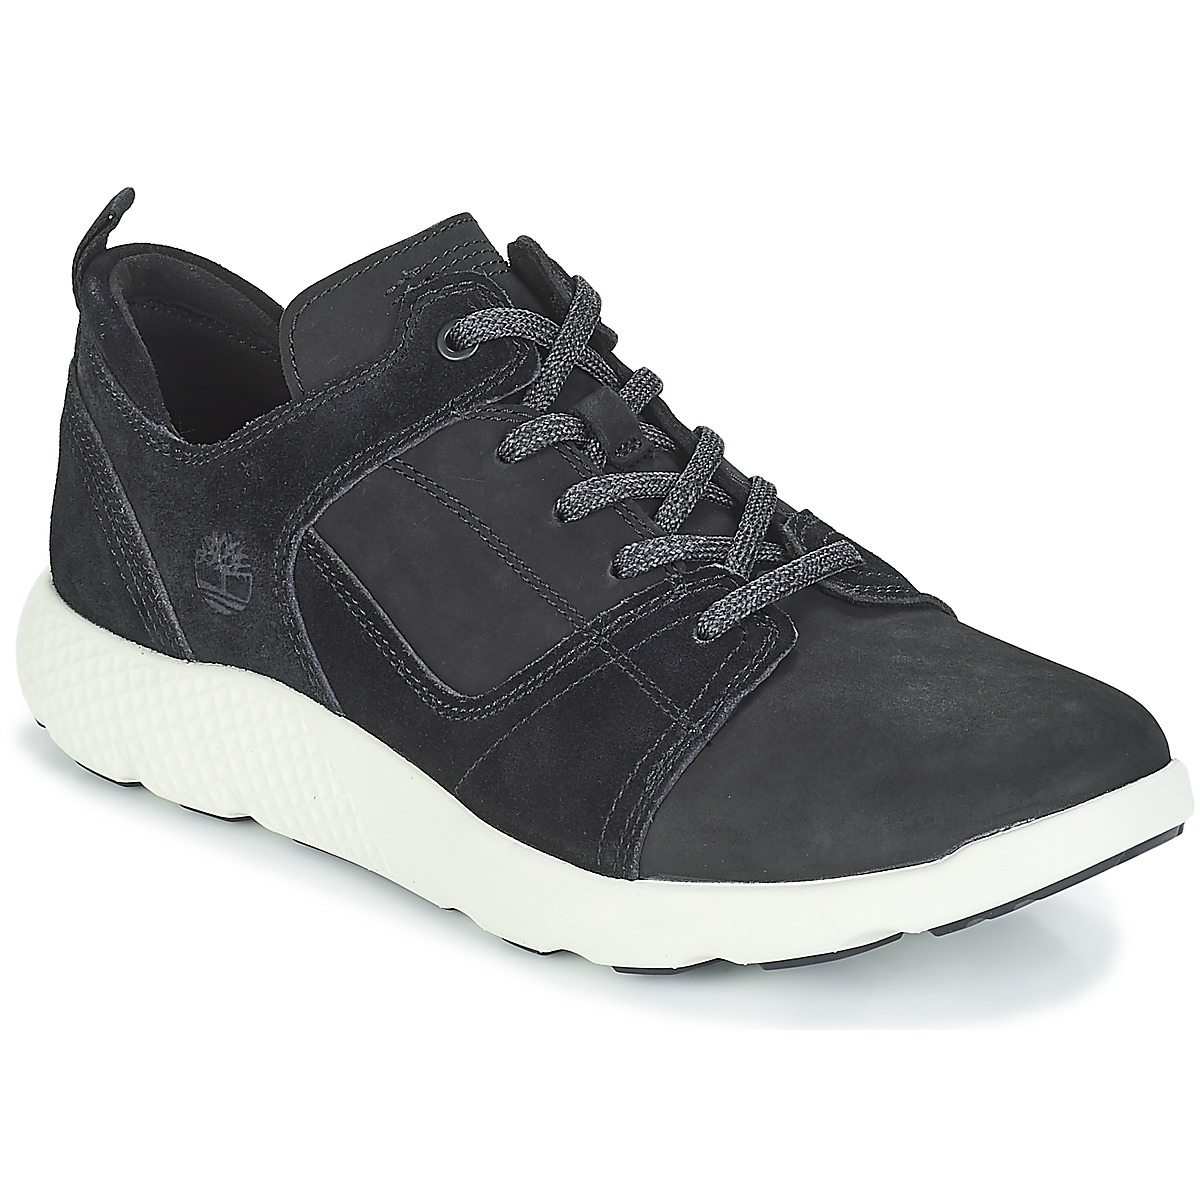 Zapatos Hombre Zapatillas altas Timberland FlyRoam Leather Oxford Negro